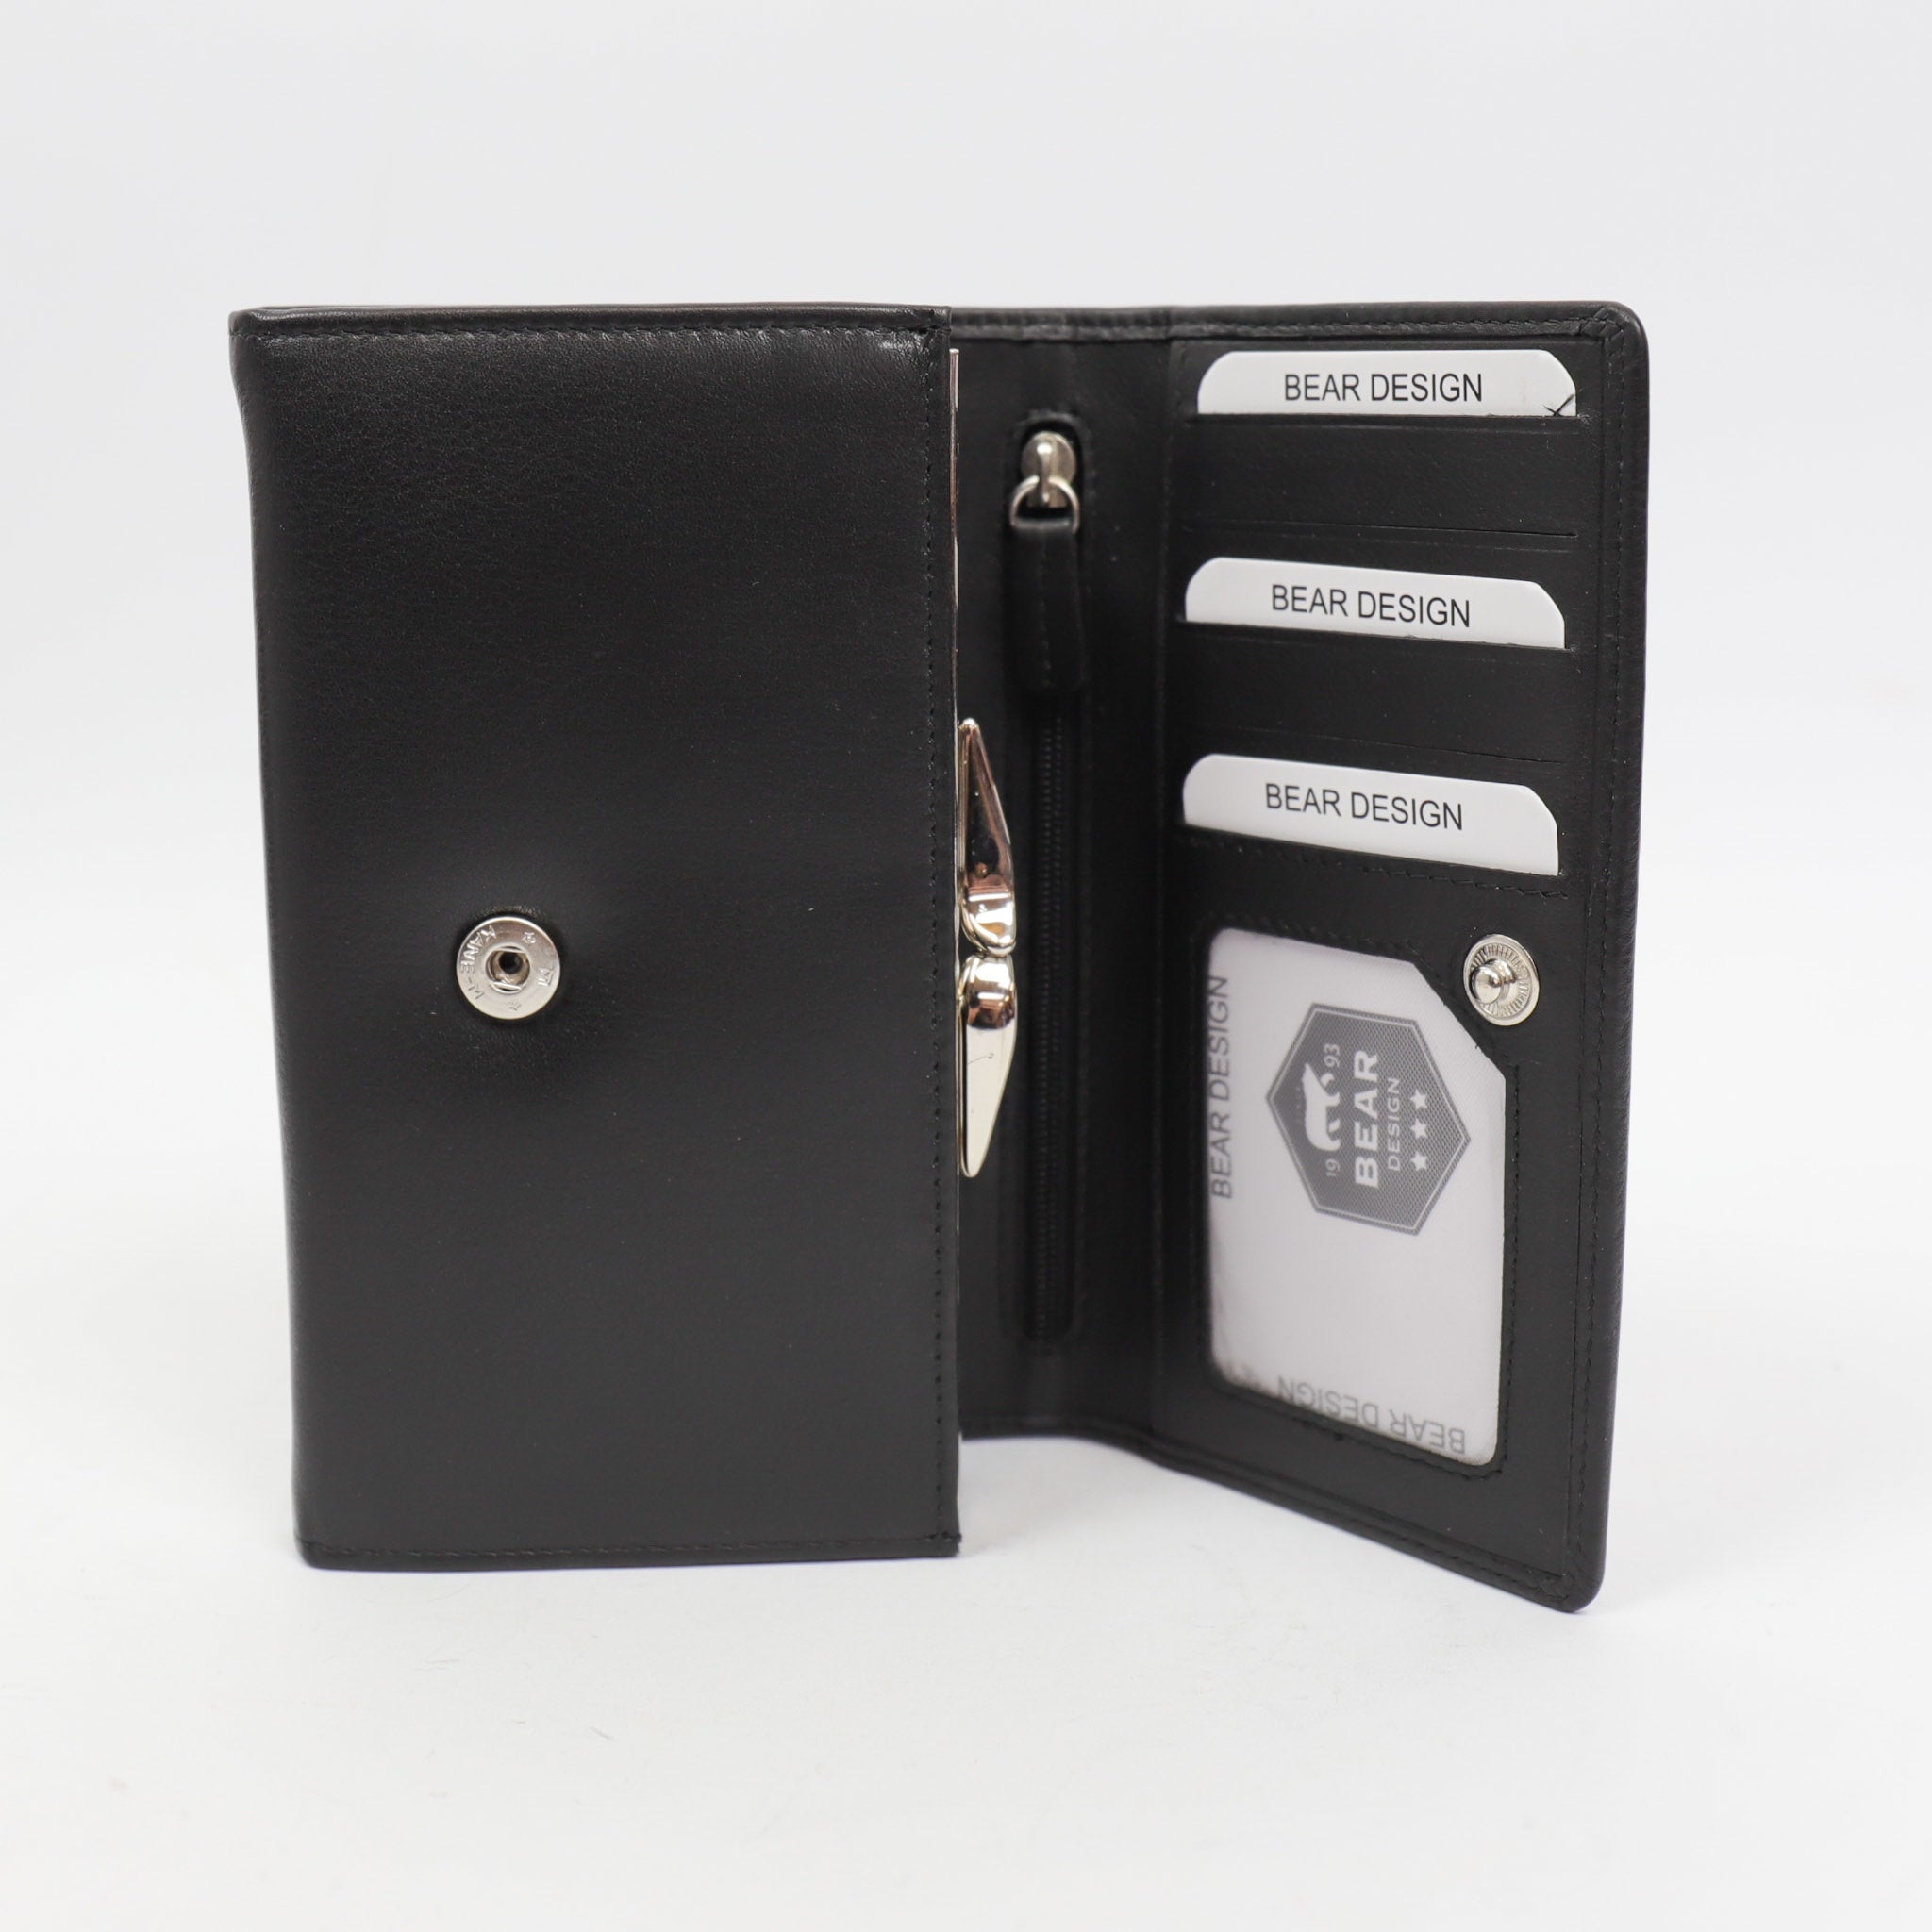 Wrap wallet 'Lizzy' black - FR 9925